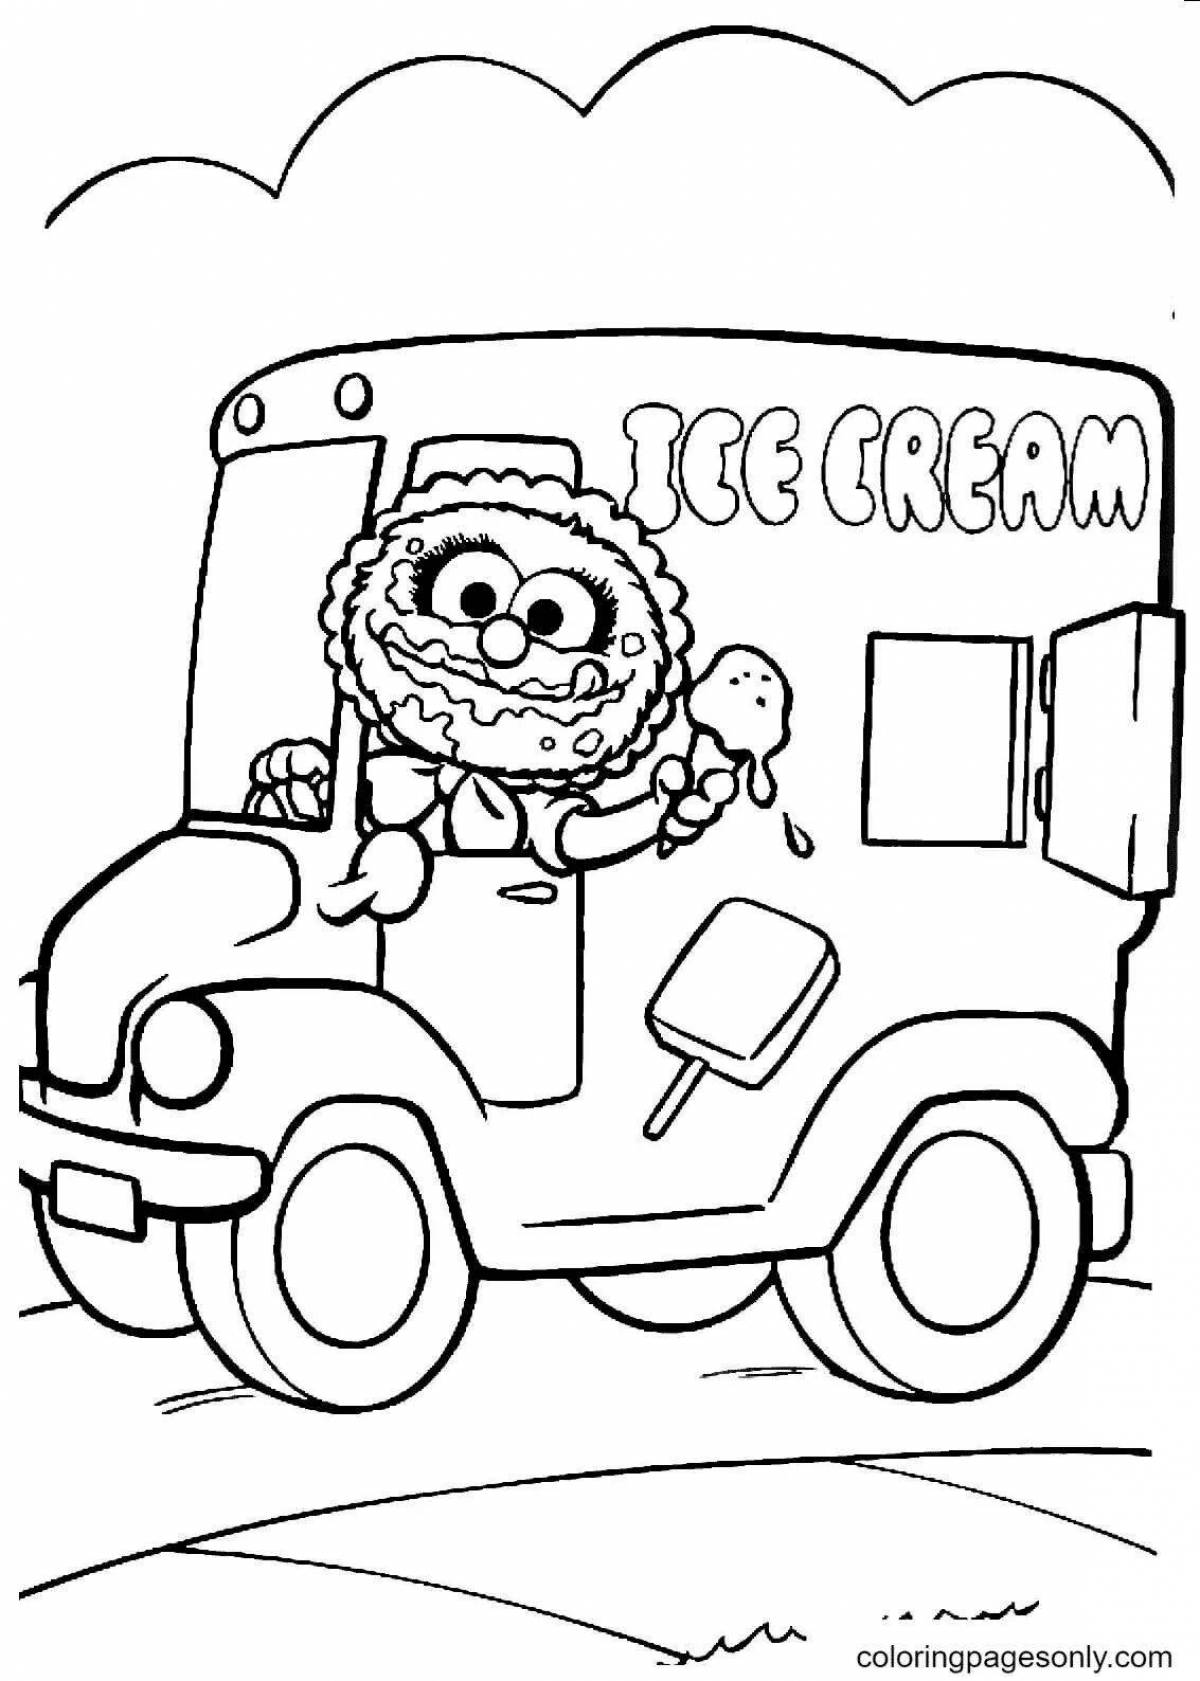 Color splash ice cream truck coloring page